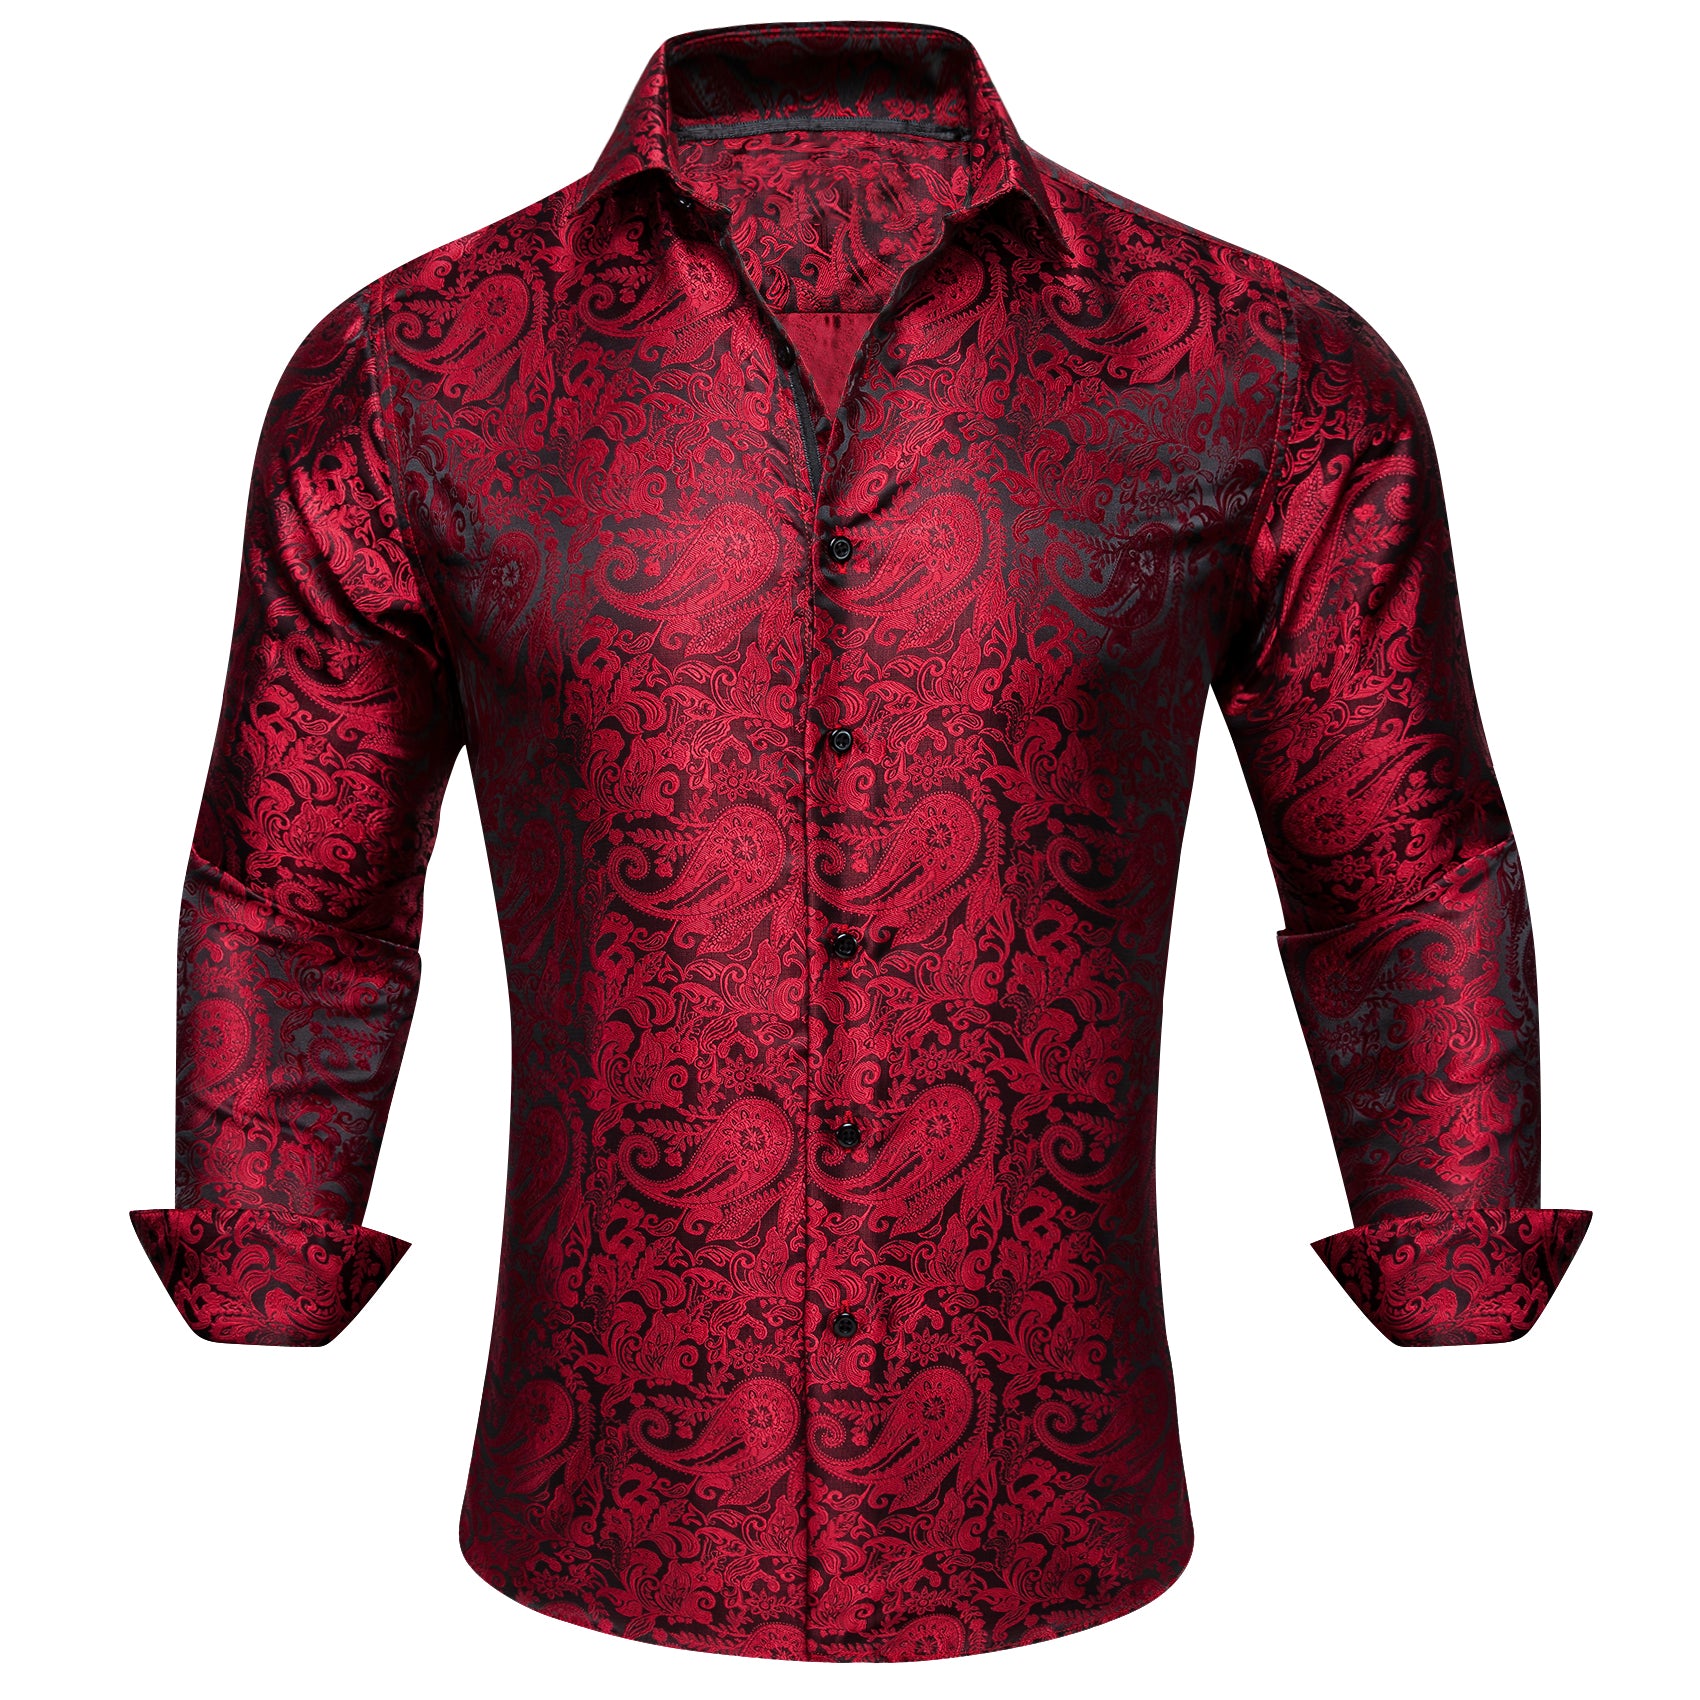 Black Ren barry wang paisley shirt long sleeve shirt for men 